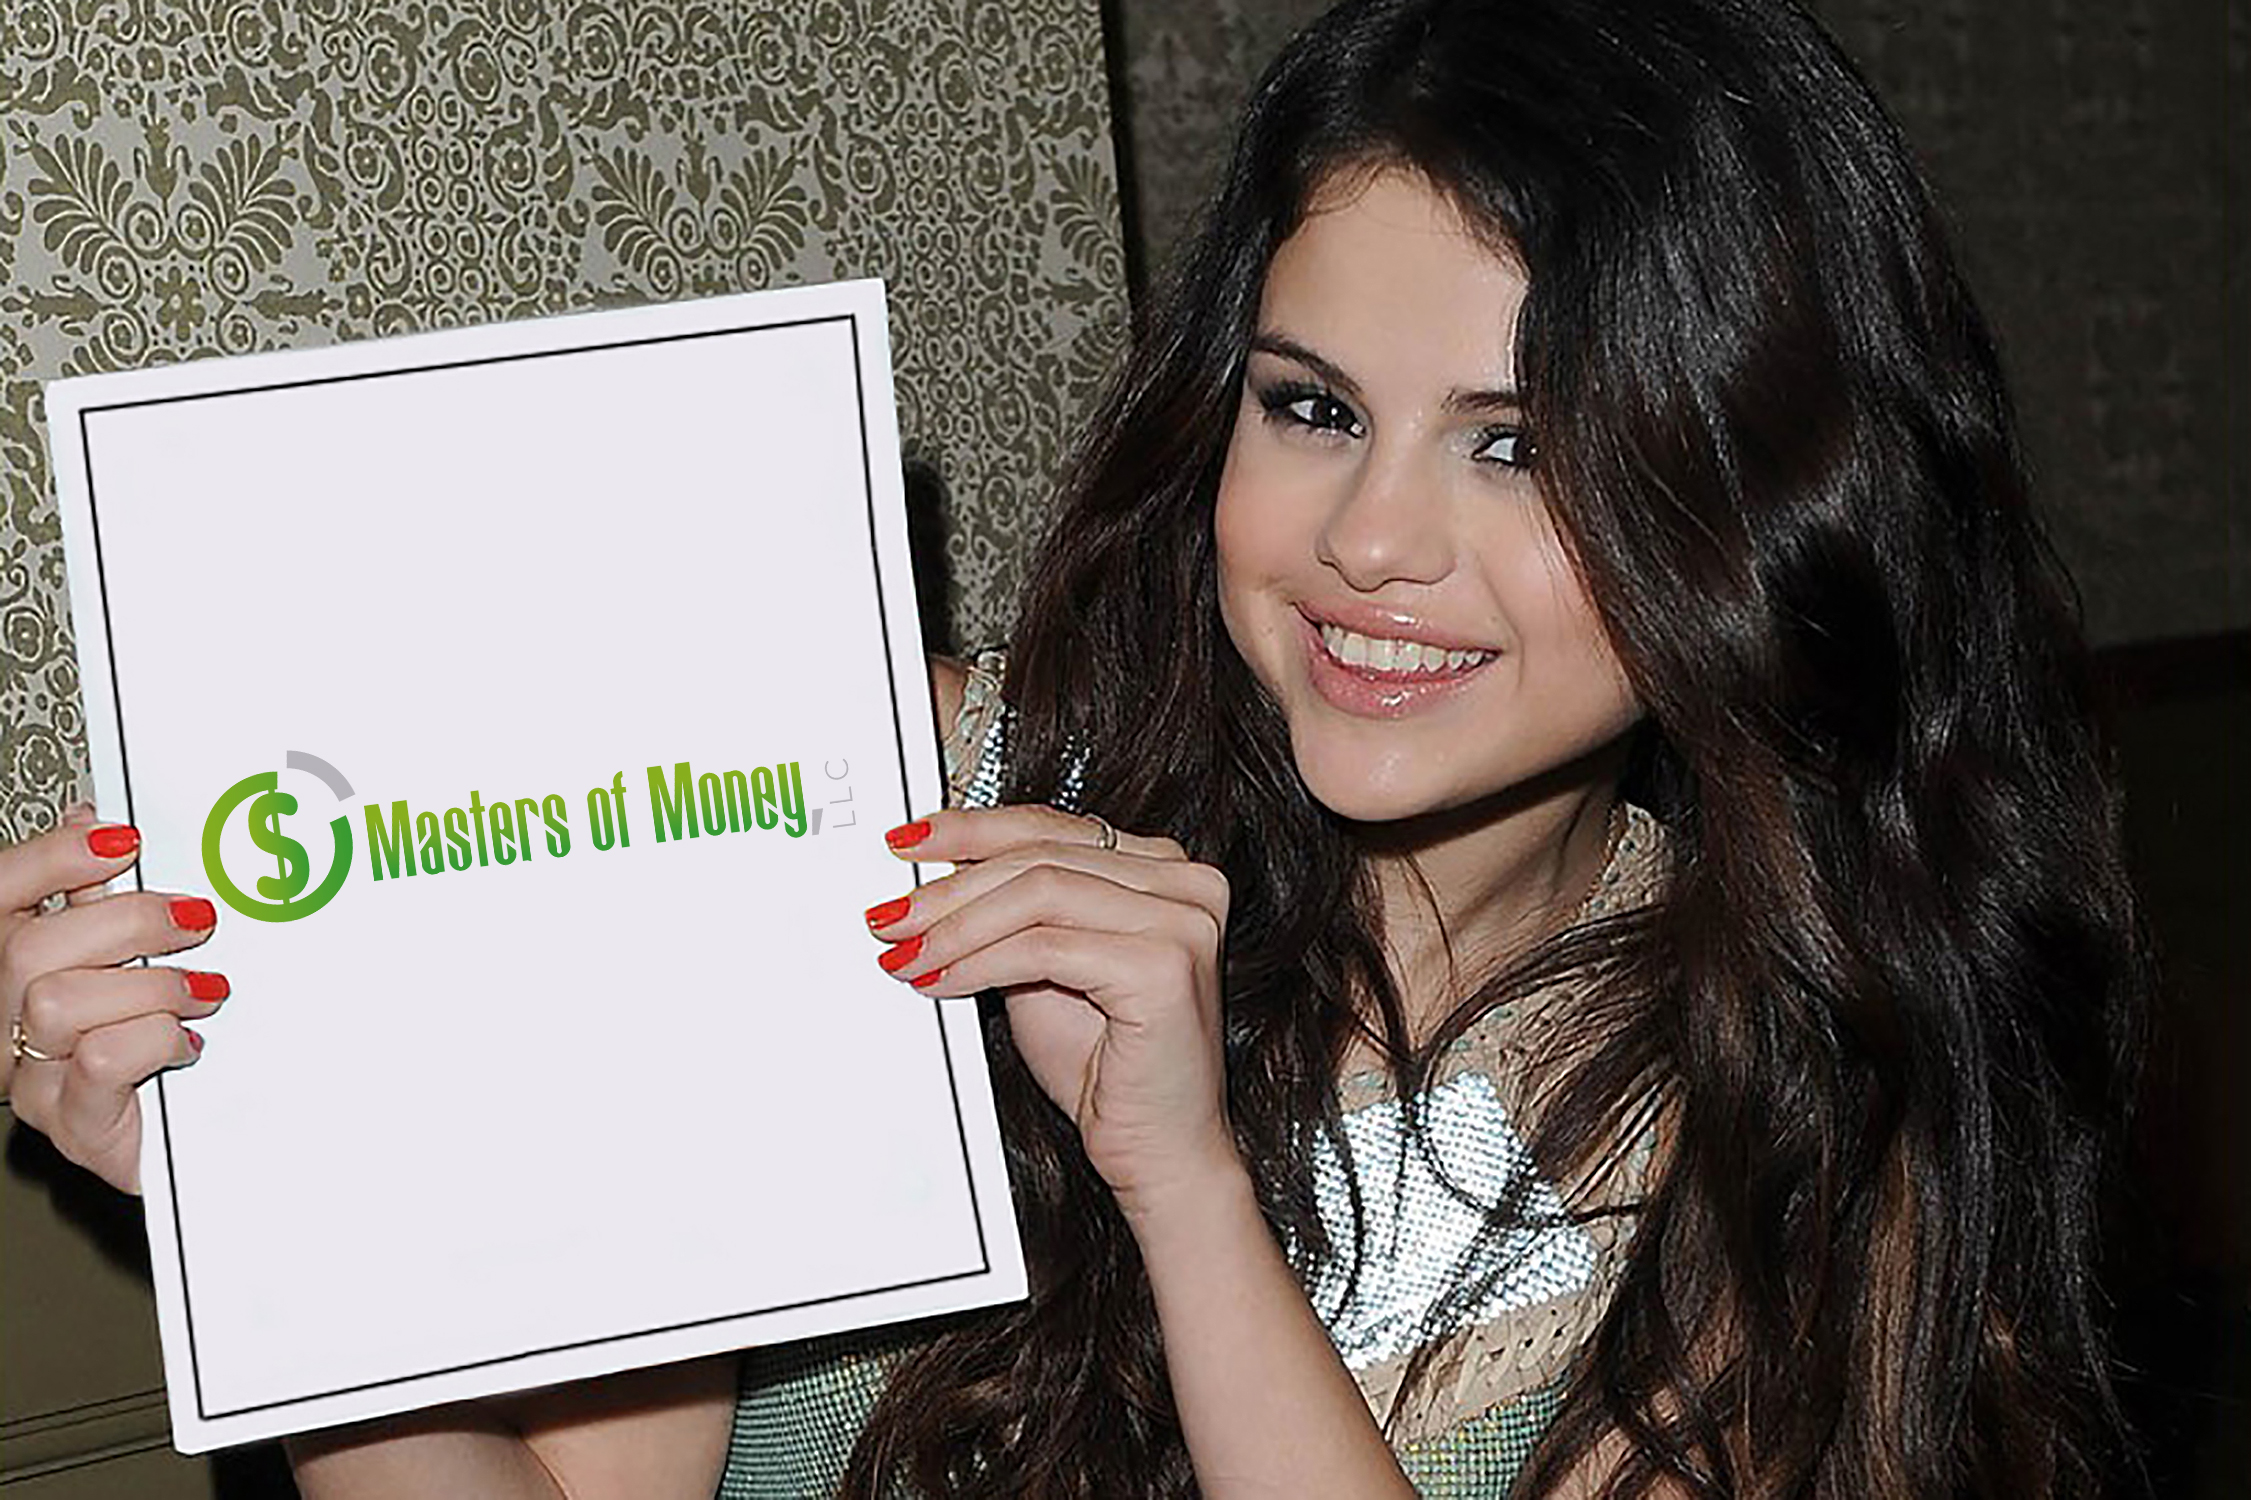 Selena Gomez holding a Masters of Money logo sign.